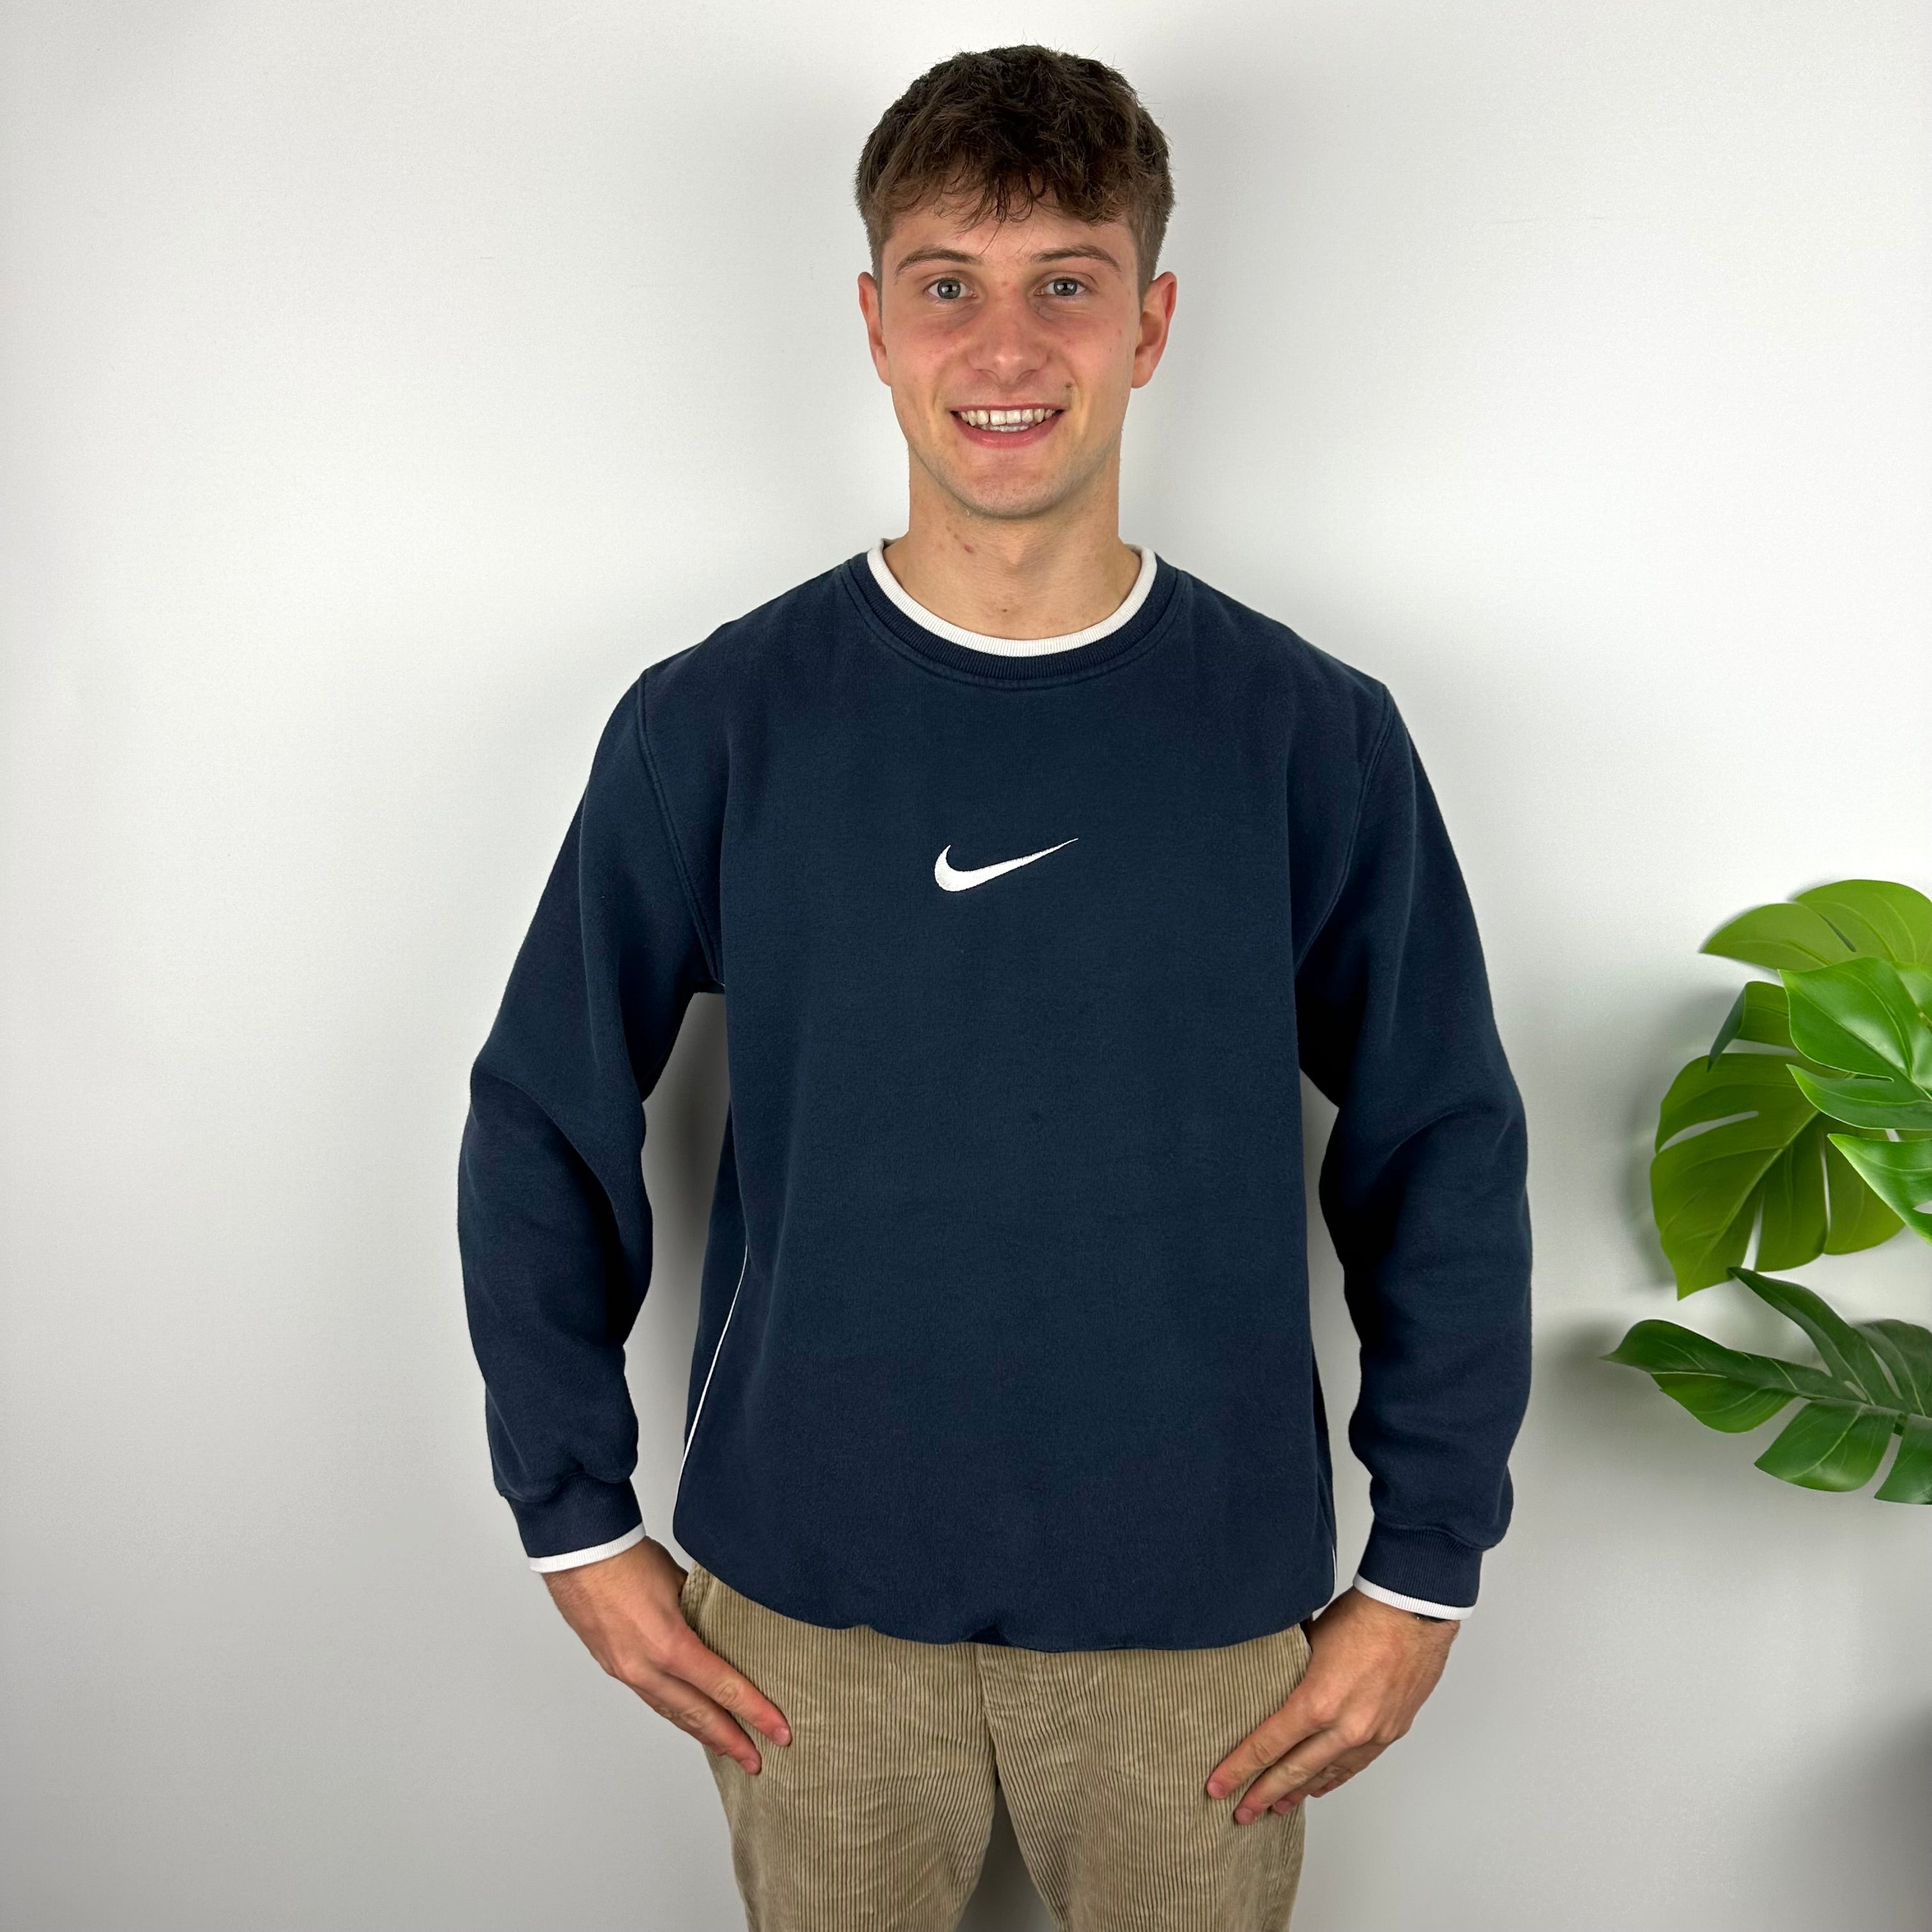 Nike Navy Embroidered Swoosh Sweatshirt (L)